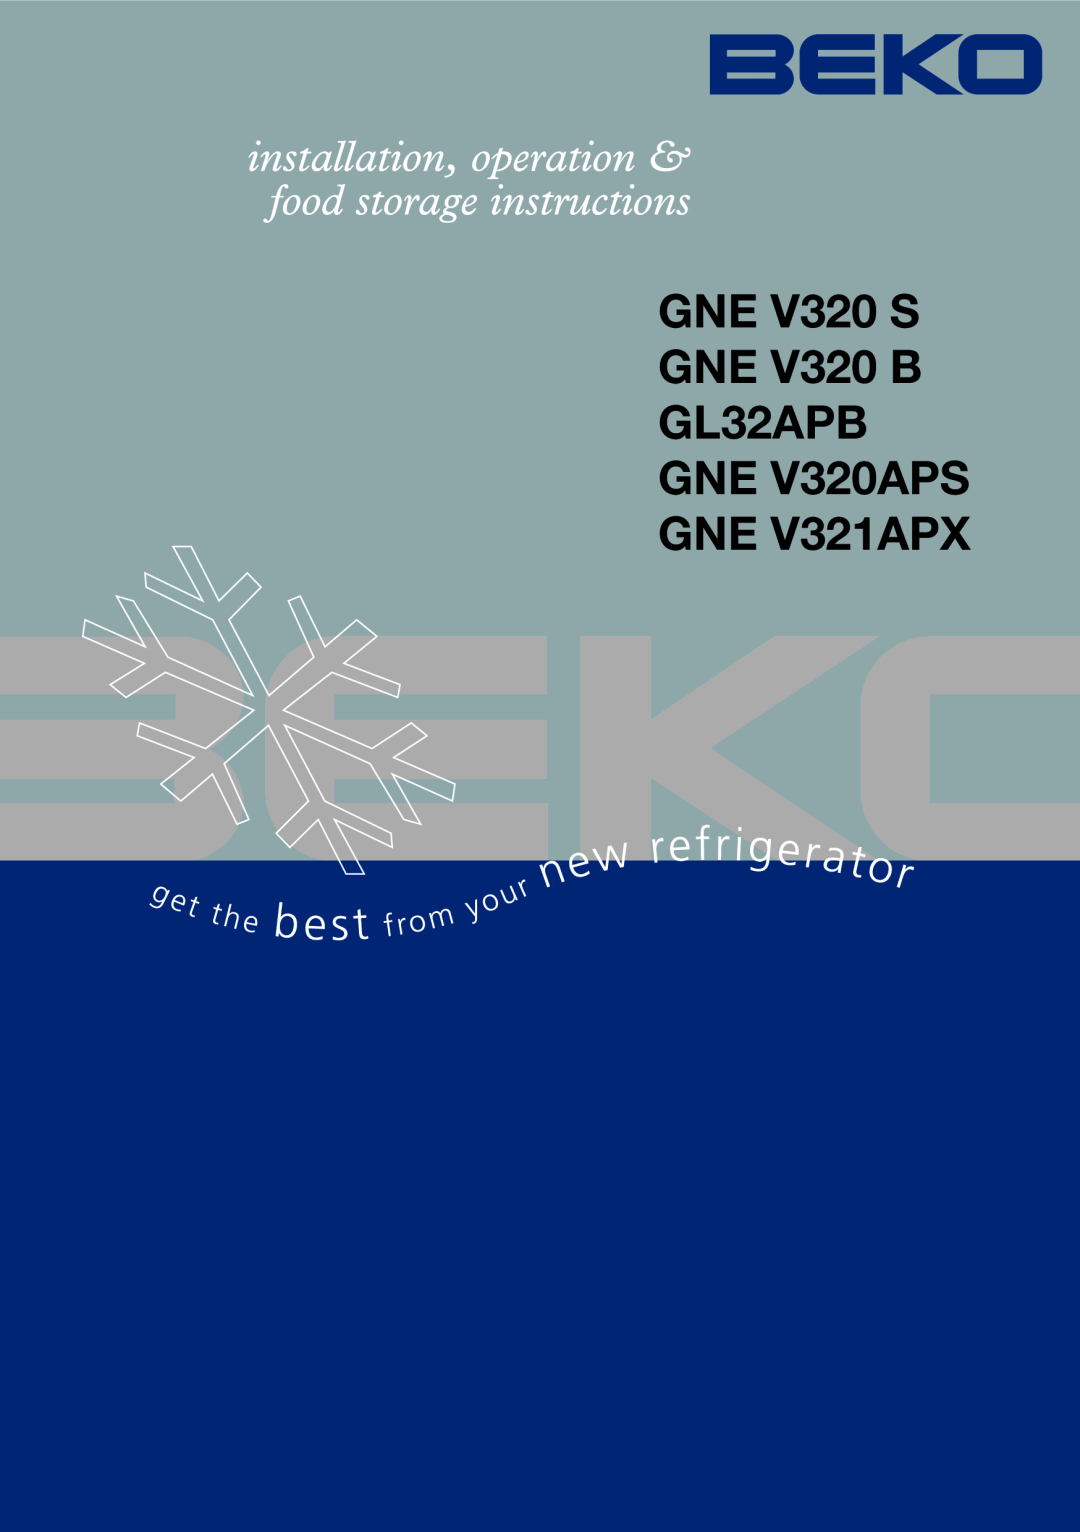 Beko GNE V321APX, gne v320 s, GNE V320APS, GNE V320 B, GL32APB manual 